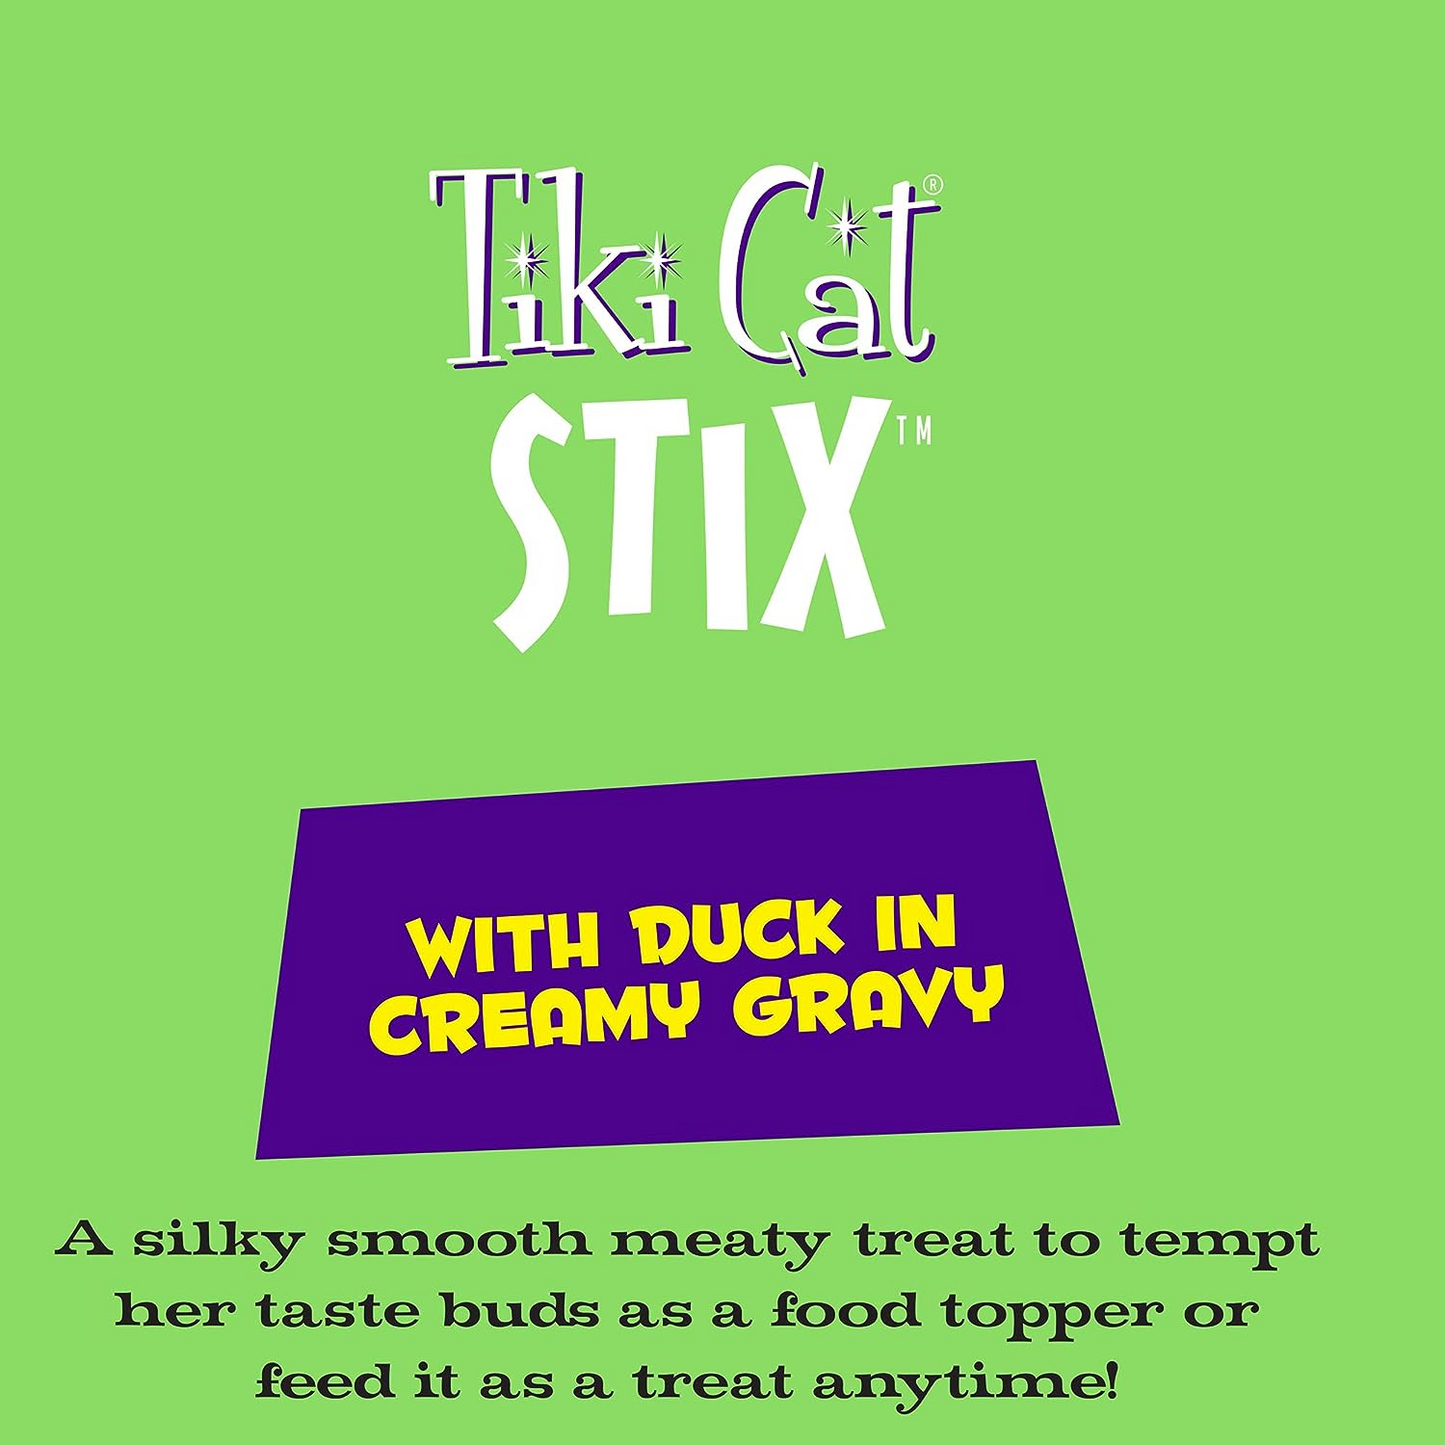 Tiki Cat Stix® Duck Wet Cat Treats